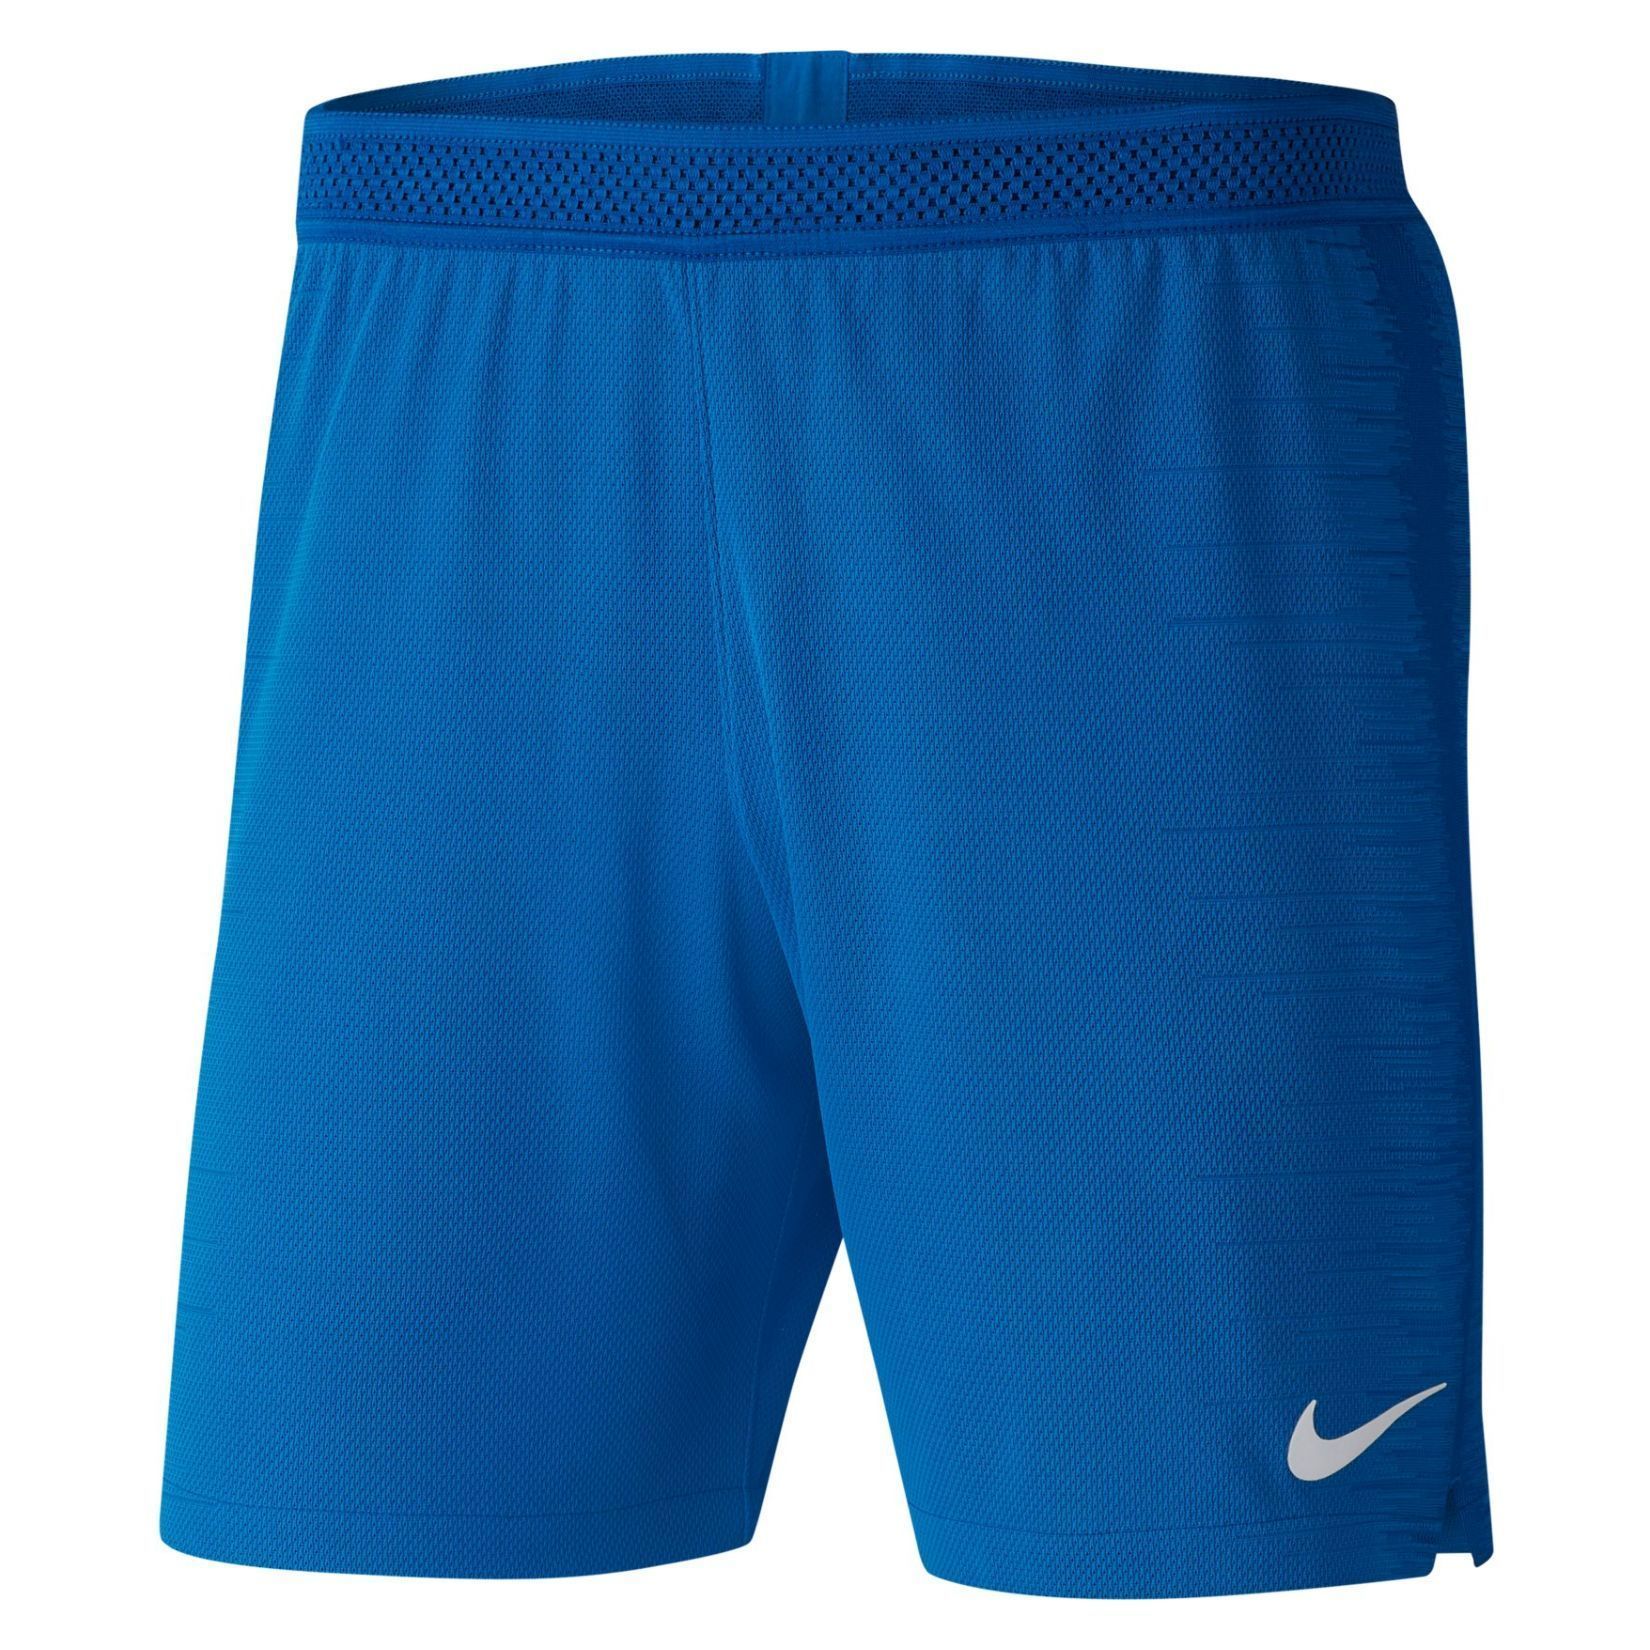 Nike Vapor Knit II Shorts - Kitlocker.com